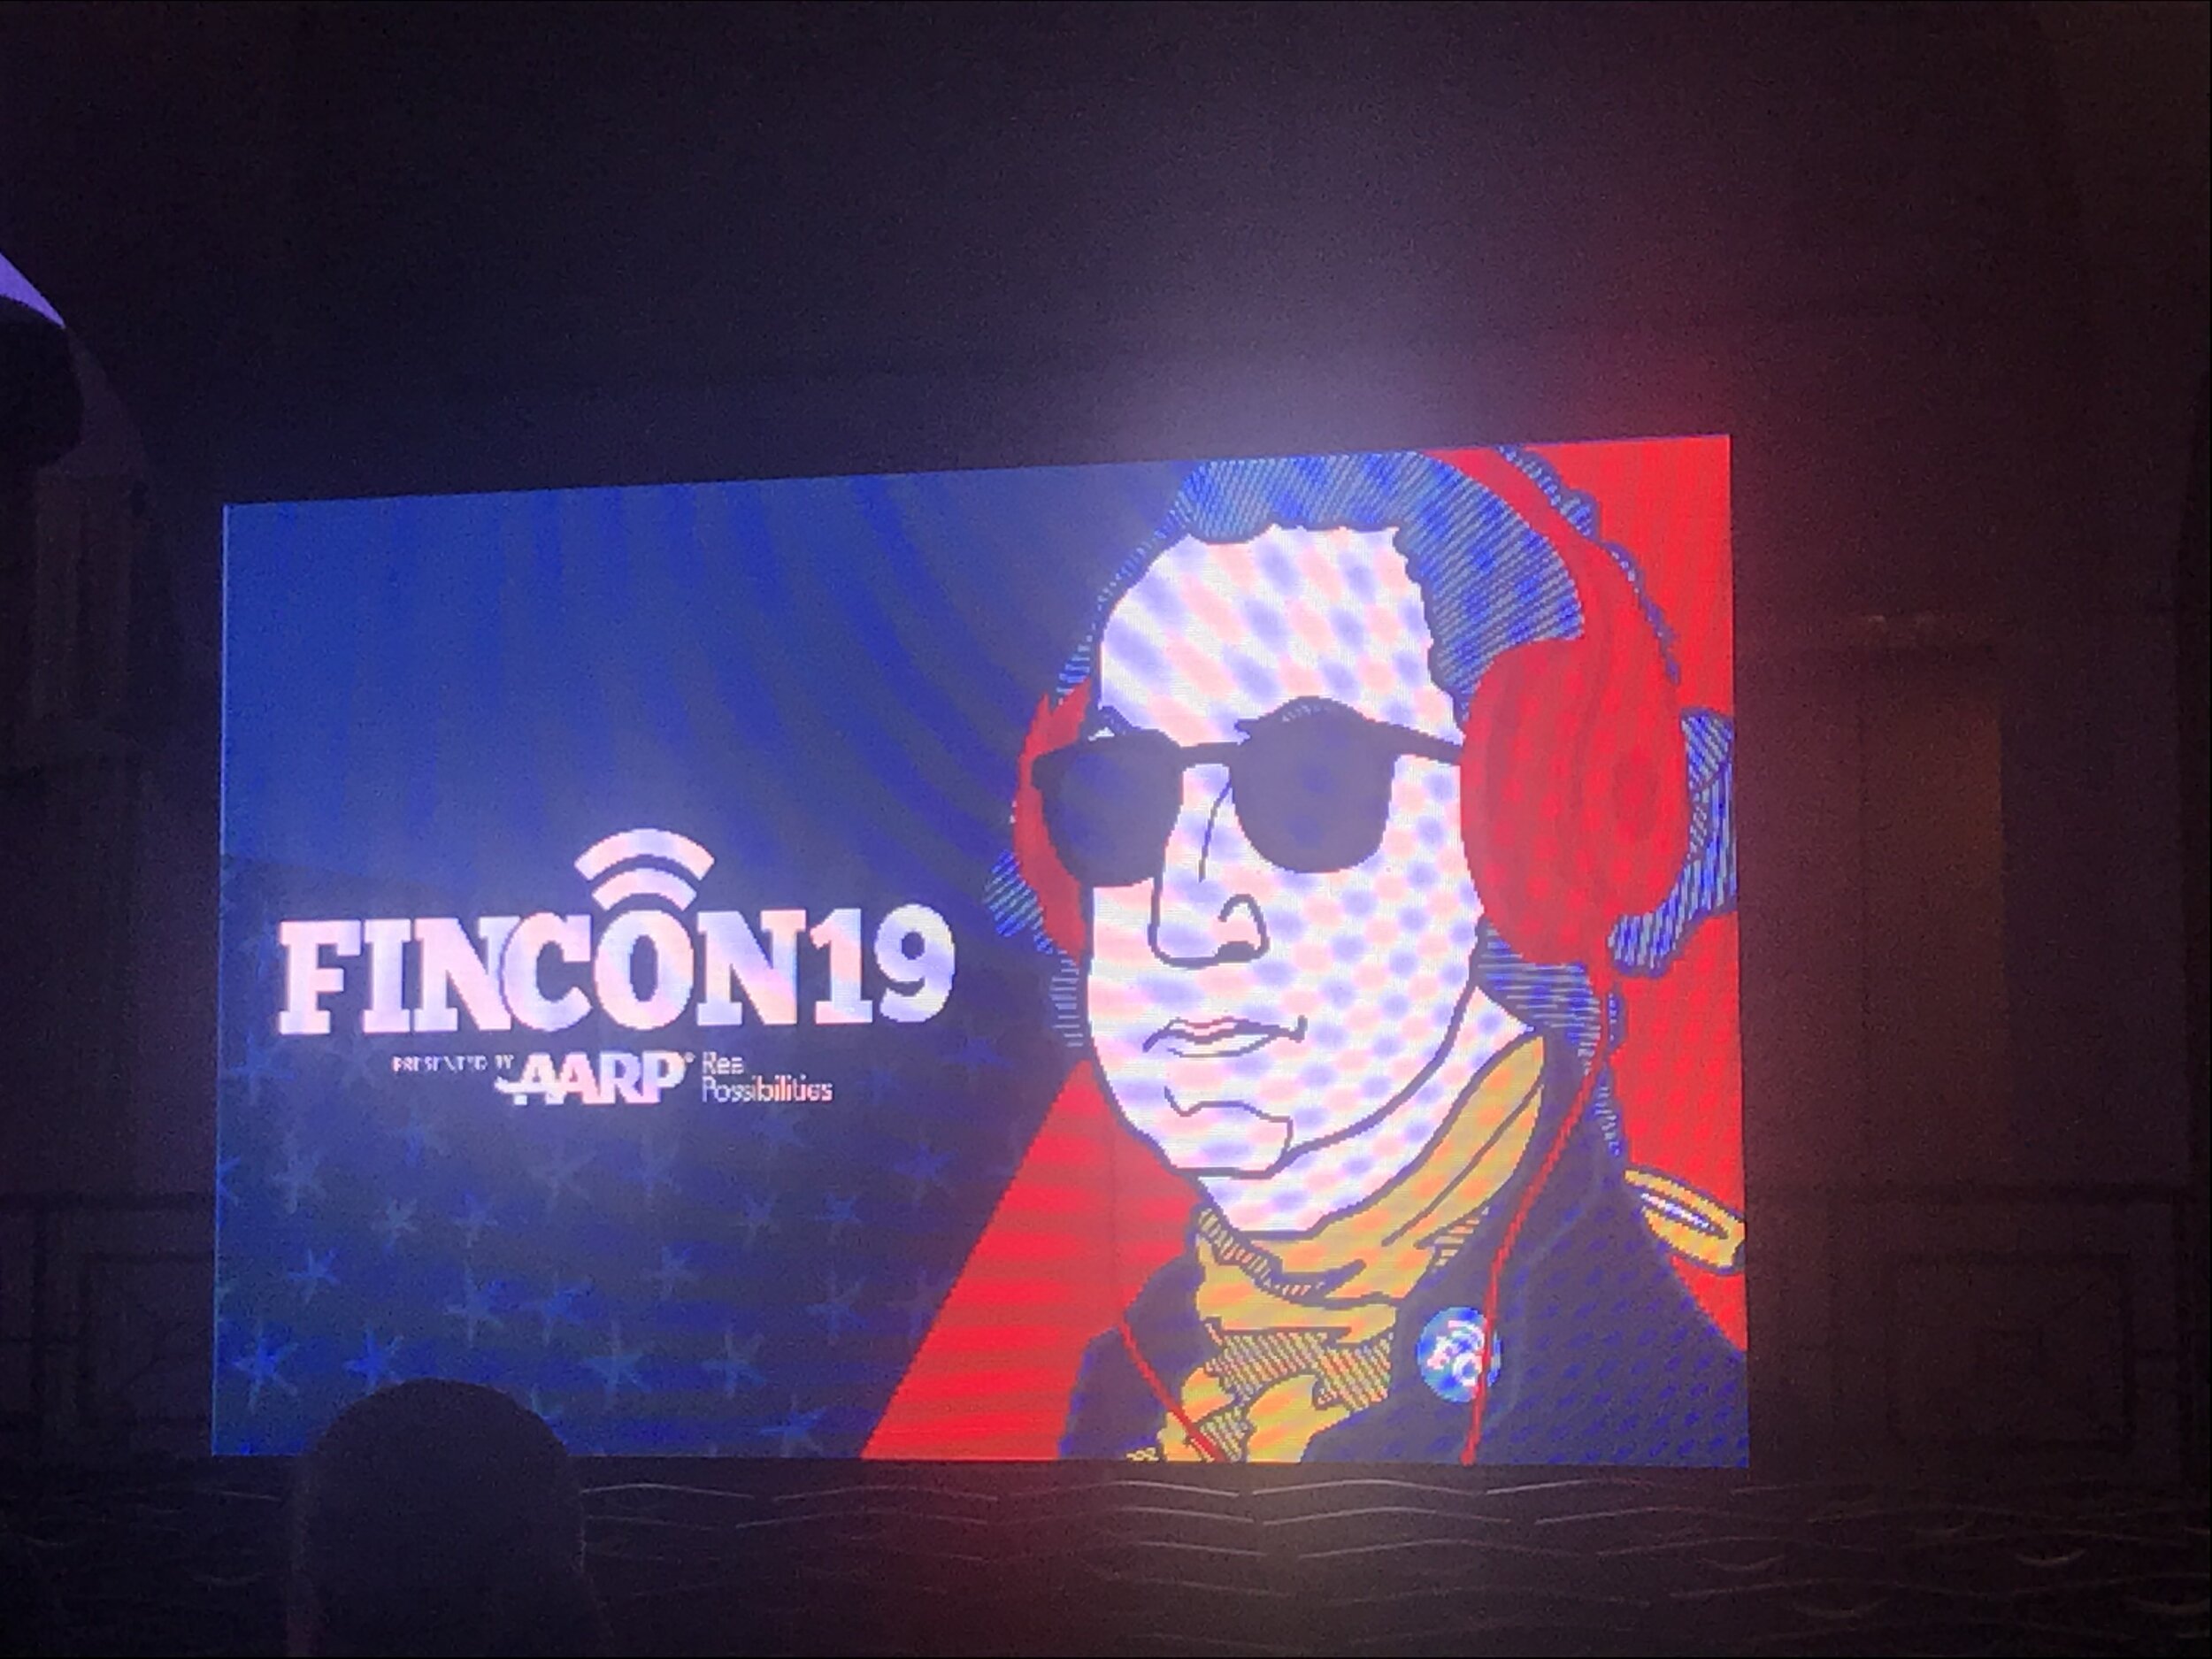 FINCON Logo at Keynote